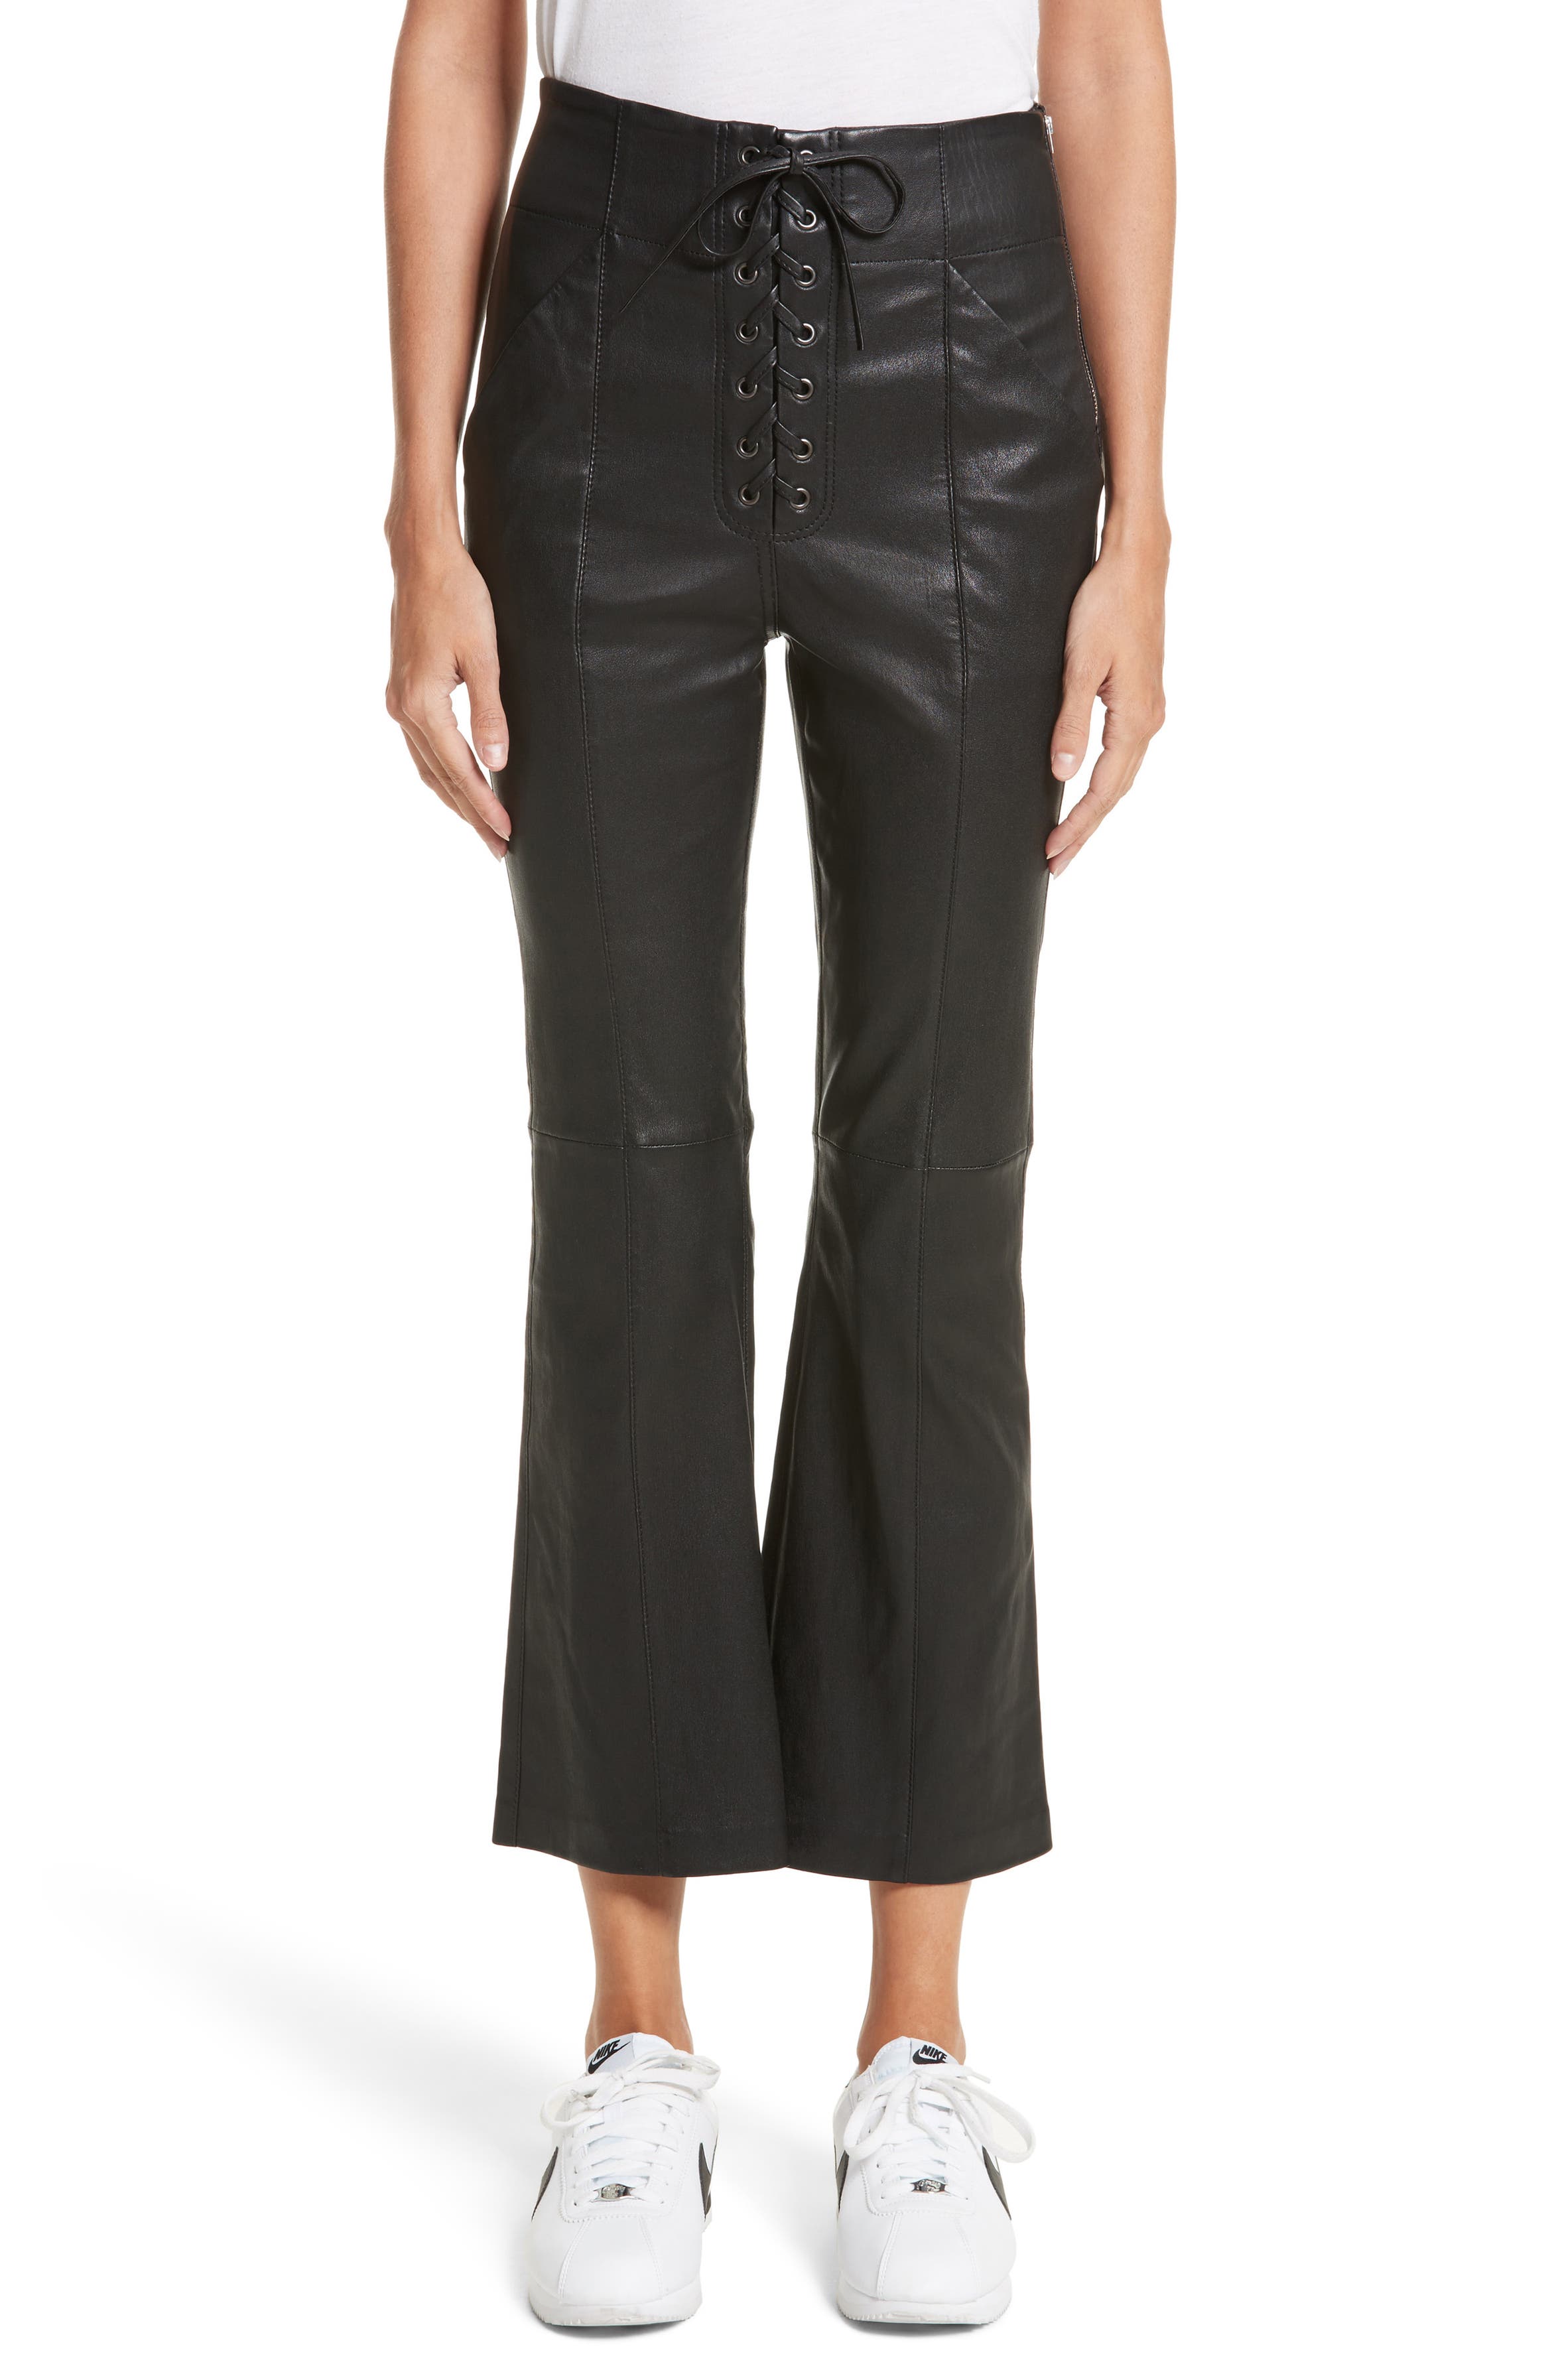 A.L.C. Delia Lace Up Leather Pants | Nordstrom